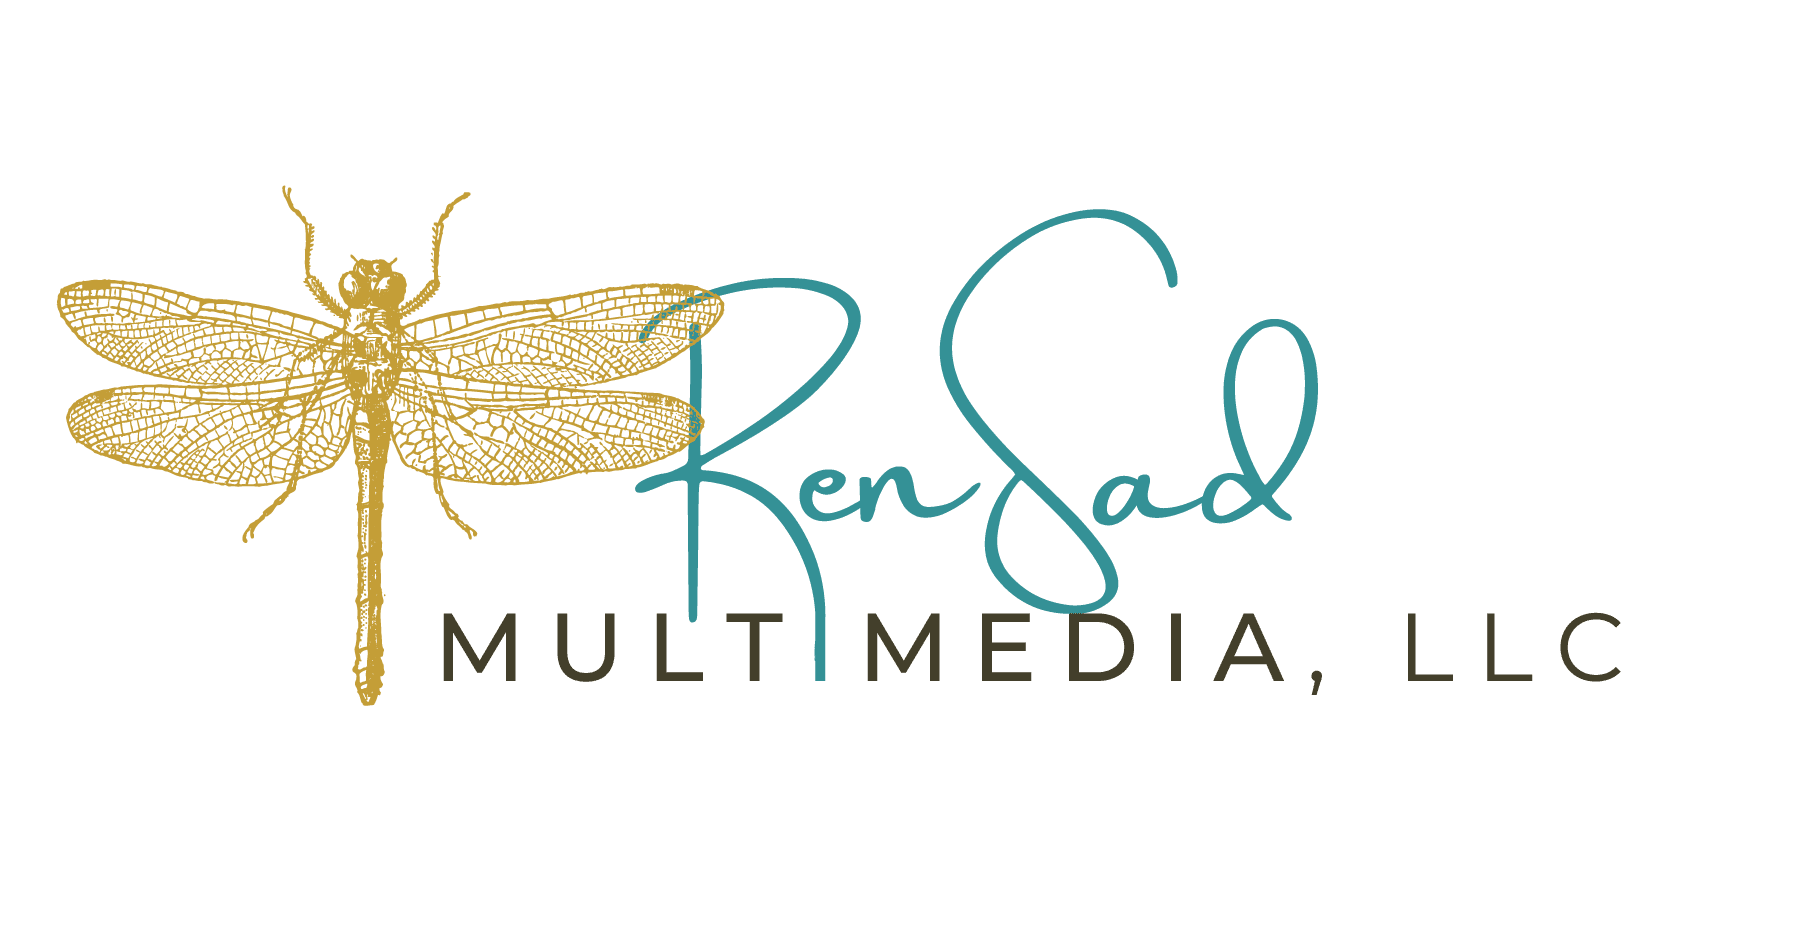 RenSad Multimedia LLC